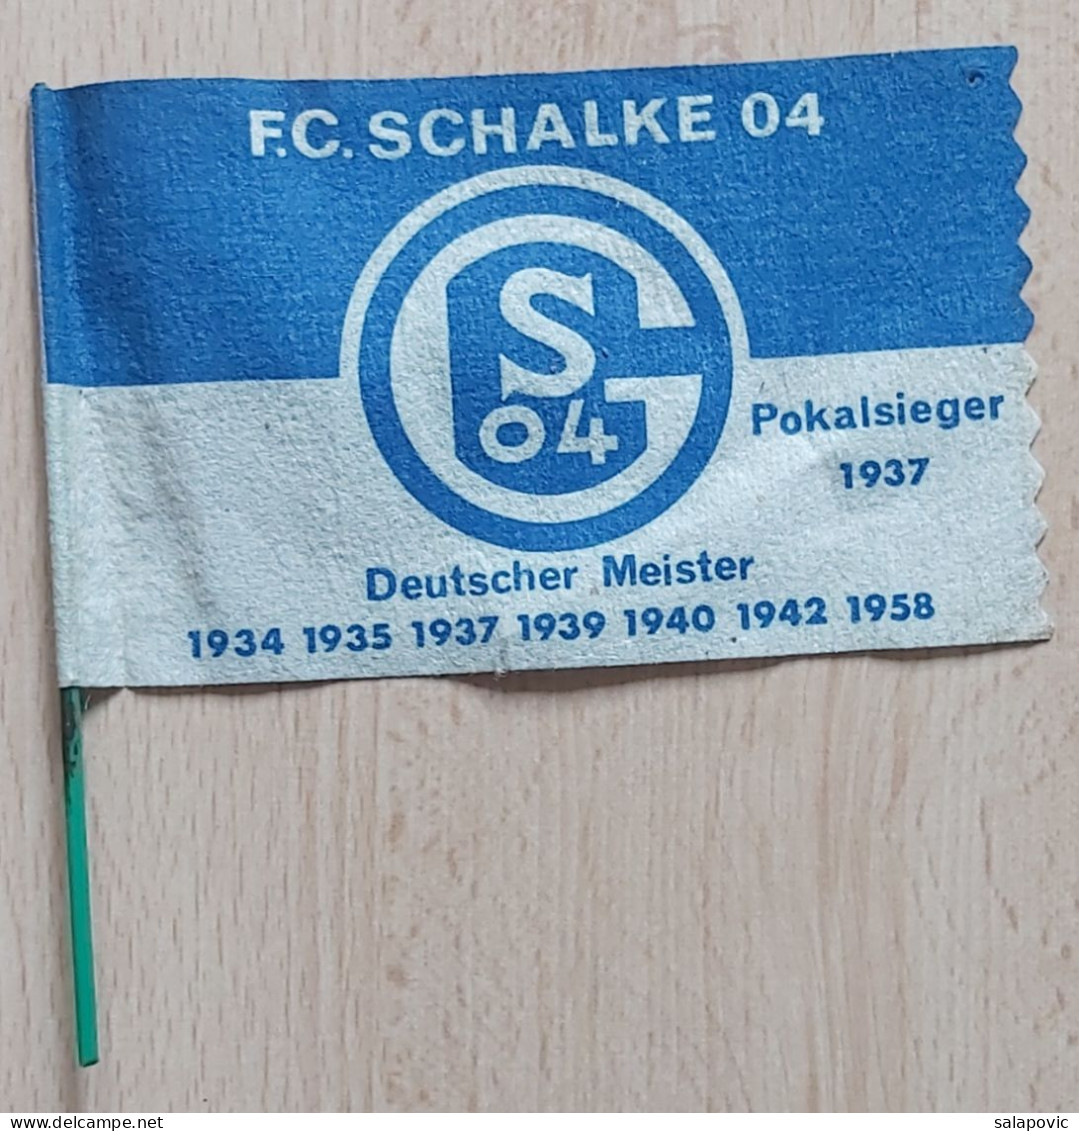 FC Schalke 04 Germany, Football Club Football Fussball Soccer Calcio PENNANT ZS 1 KUT - Apparel, Souvenirs & Other